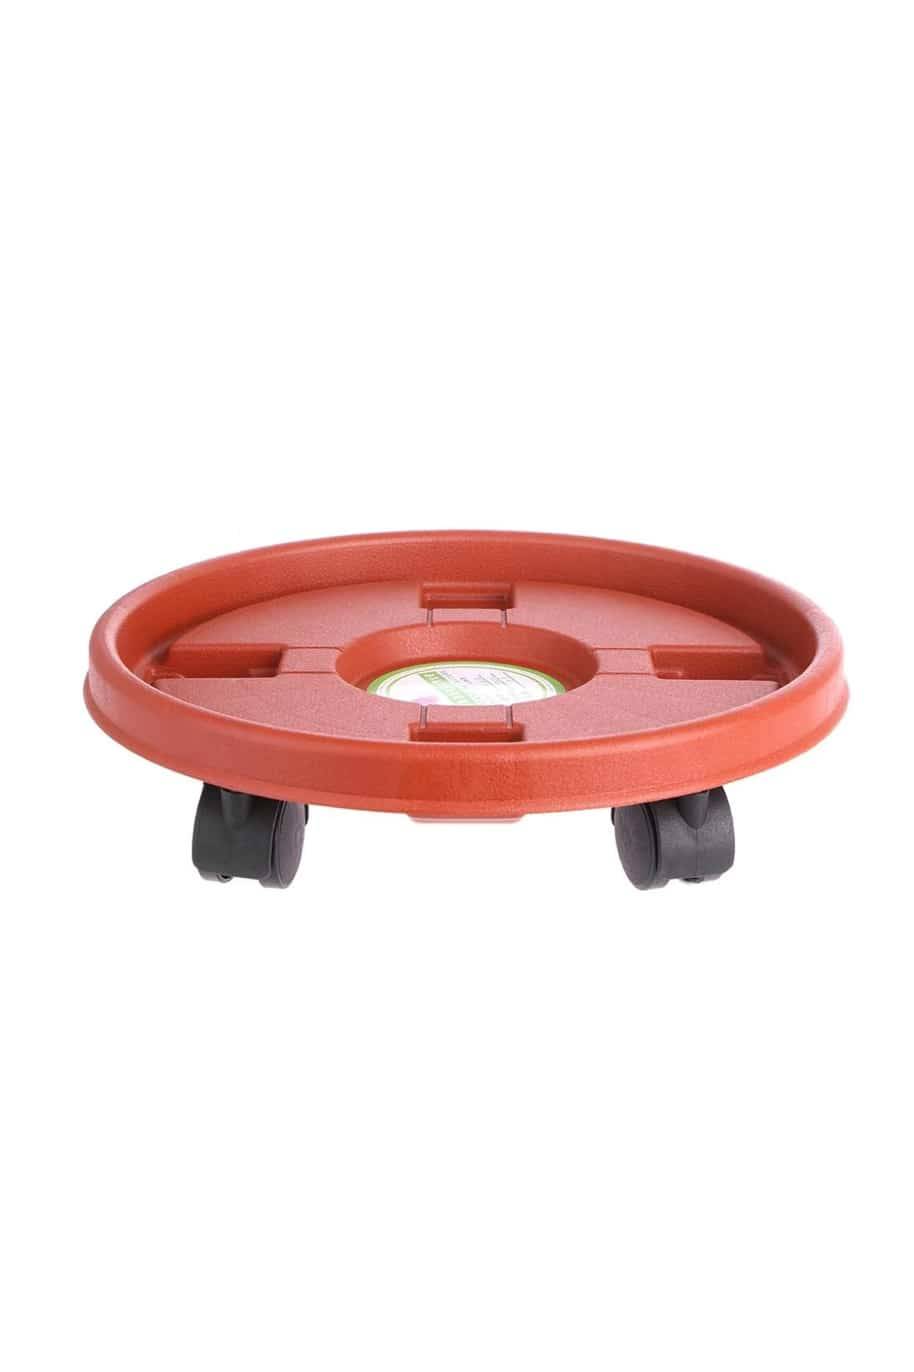 Movable Pot Tray - Plastic